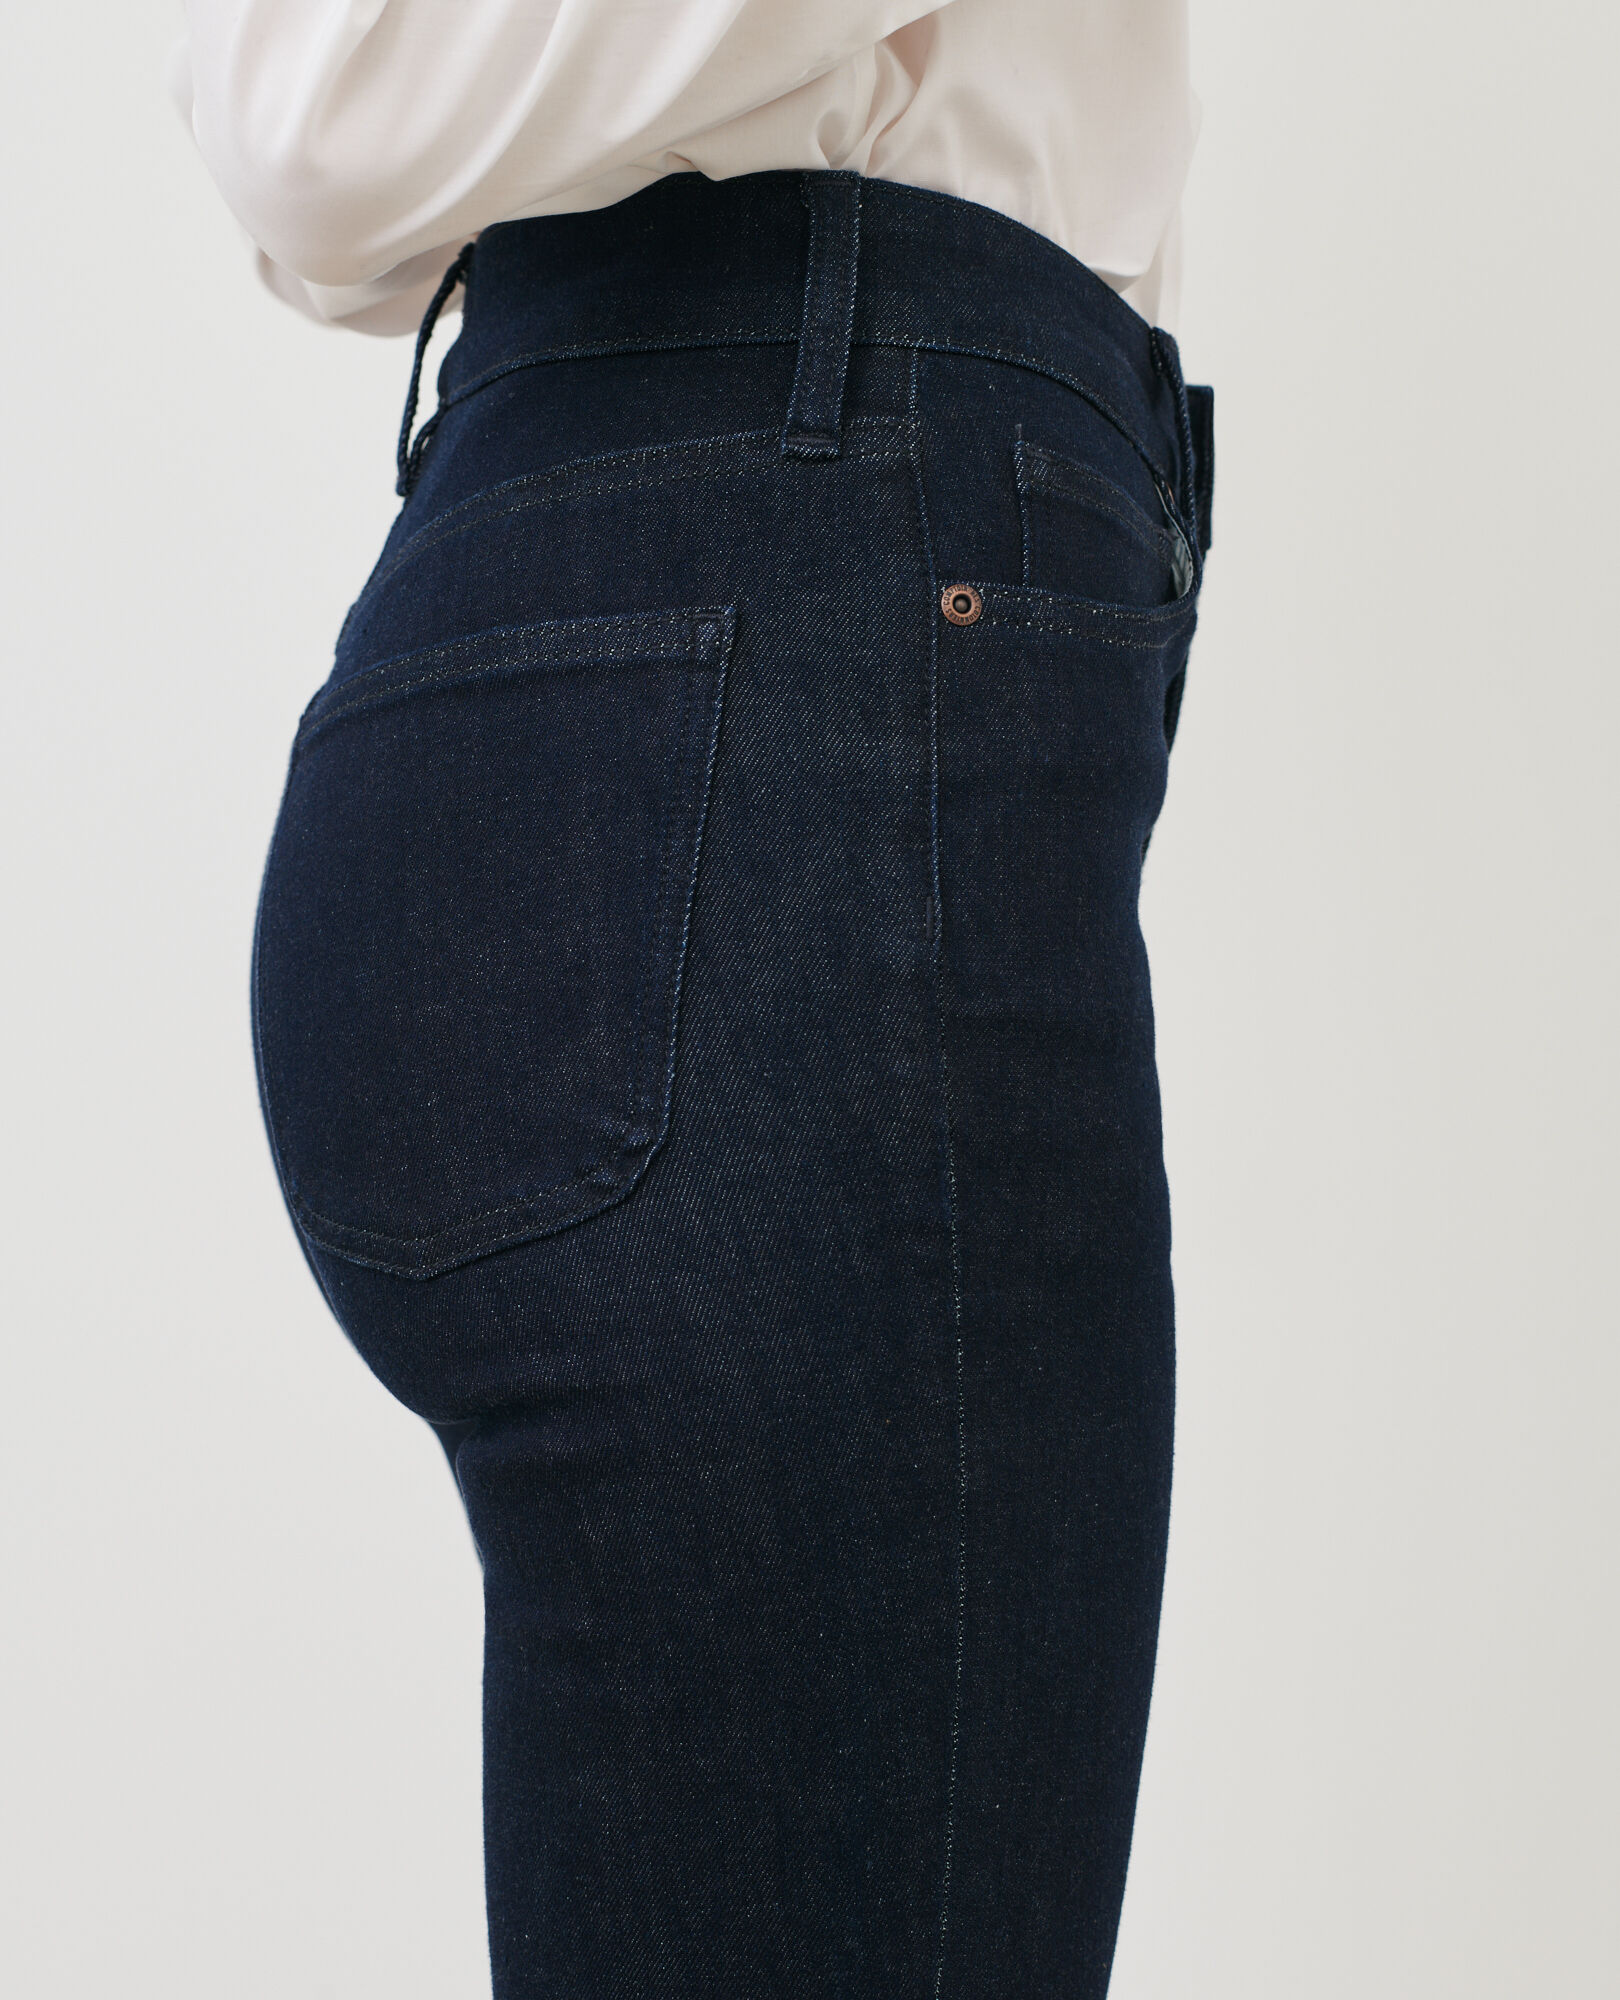 DANI - SKINNY - High-waisted jeans Dark indigo Rauky